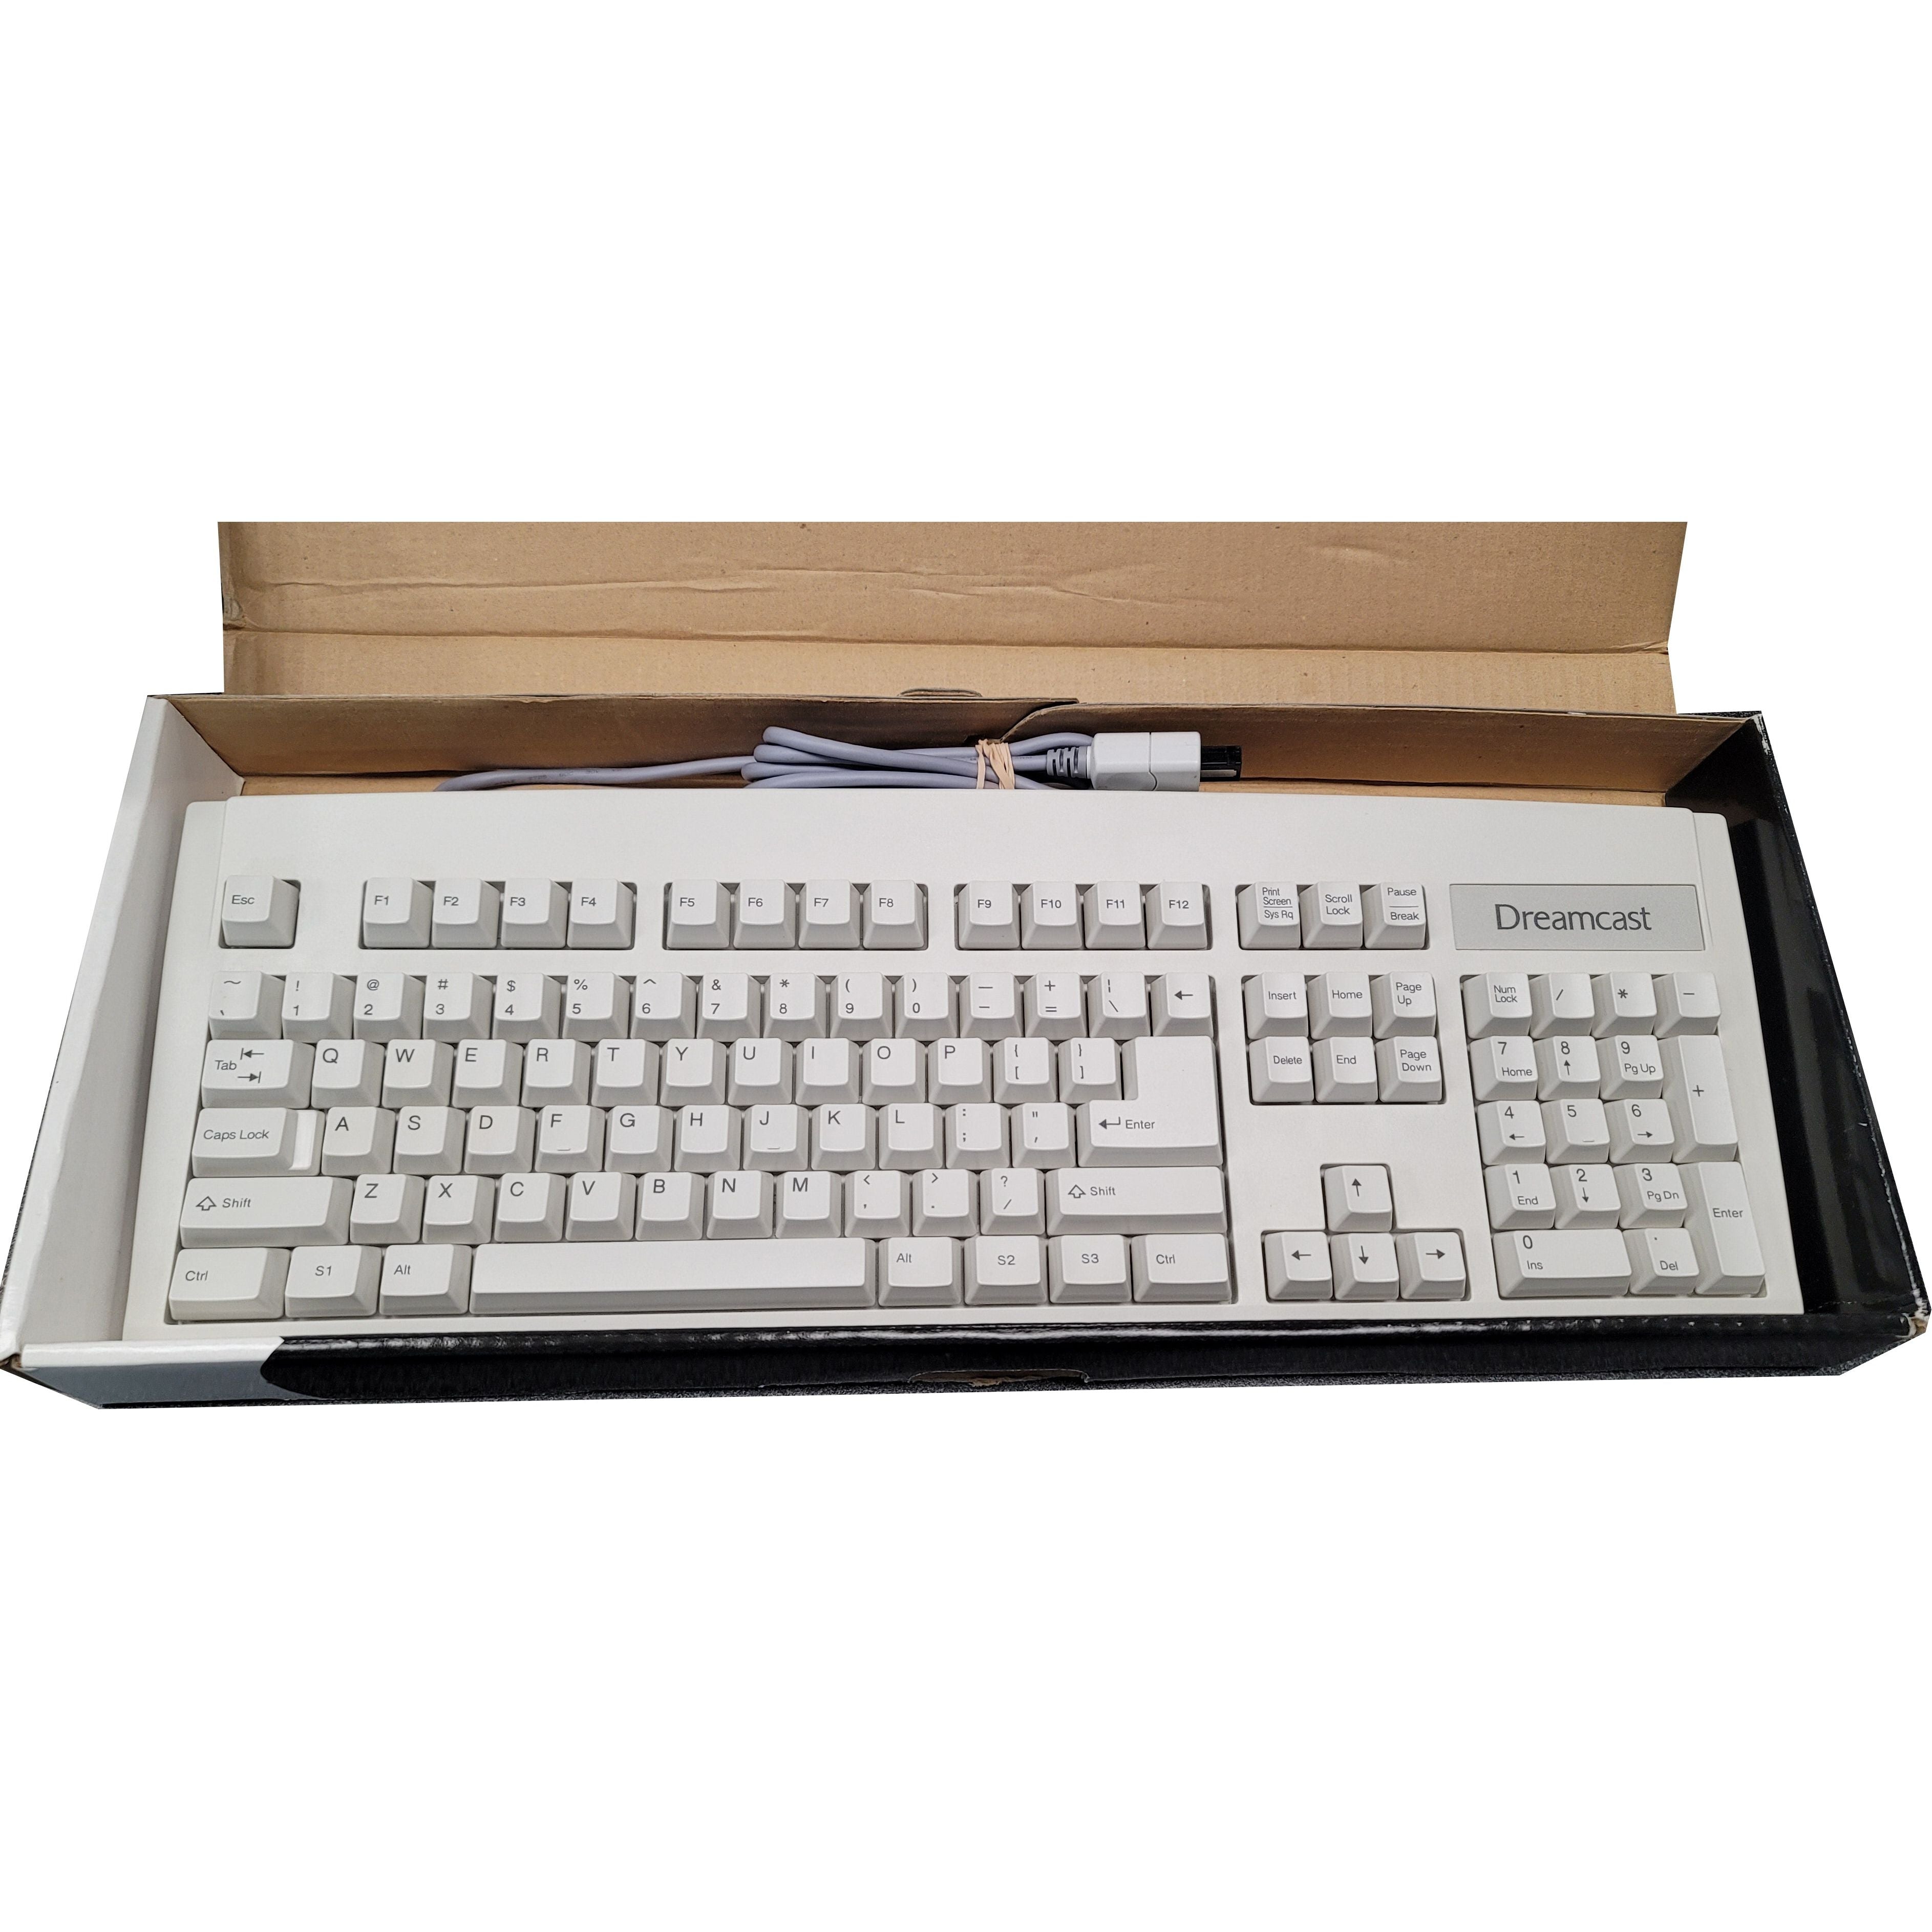 Sega Dreamcast Keyboard (Complete in Box)